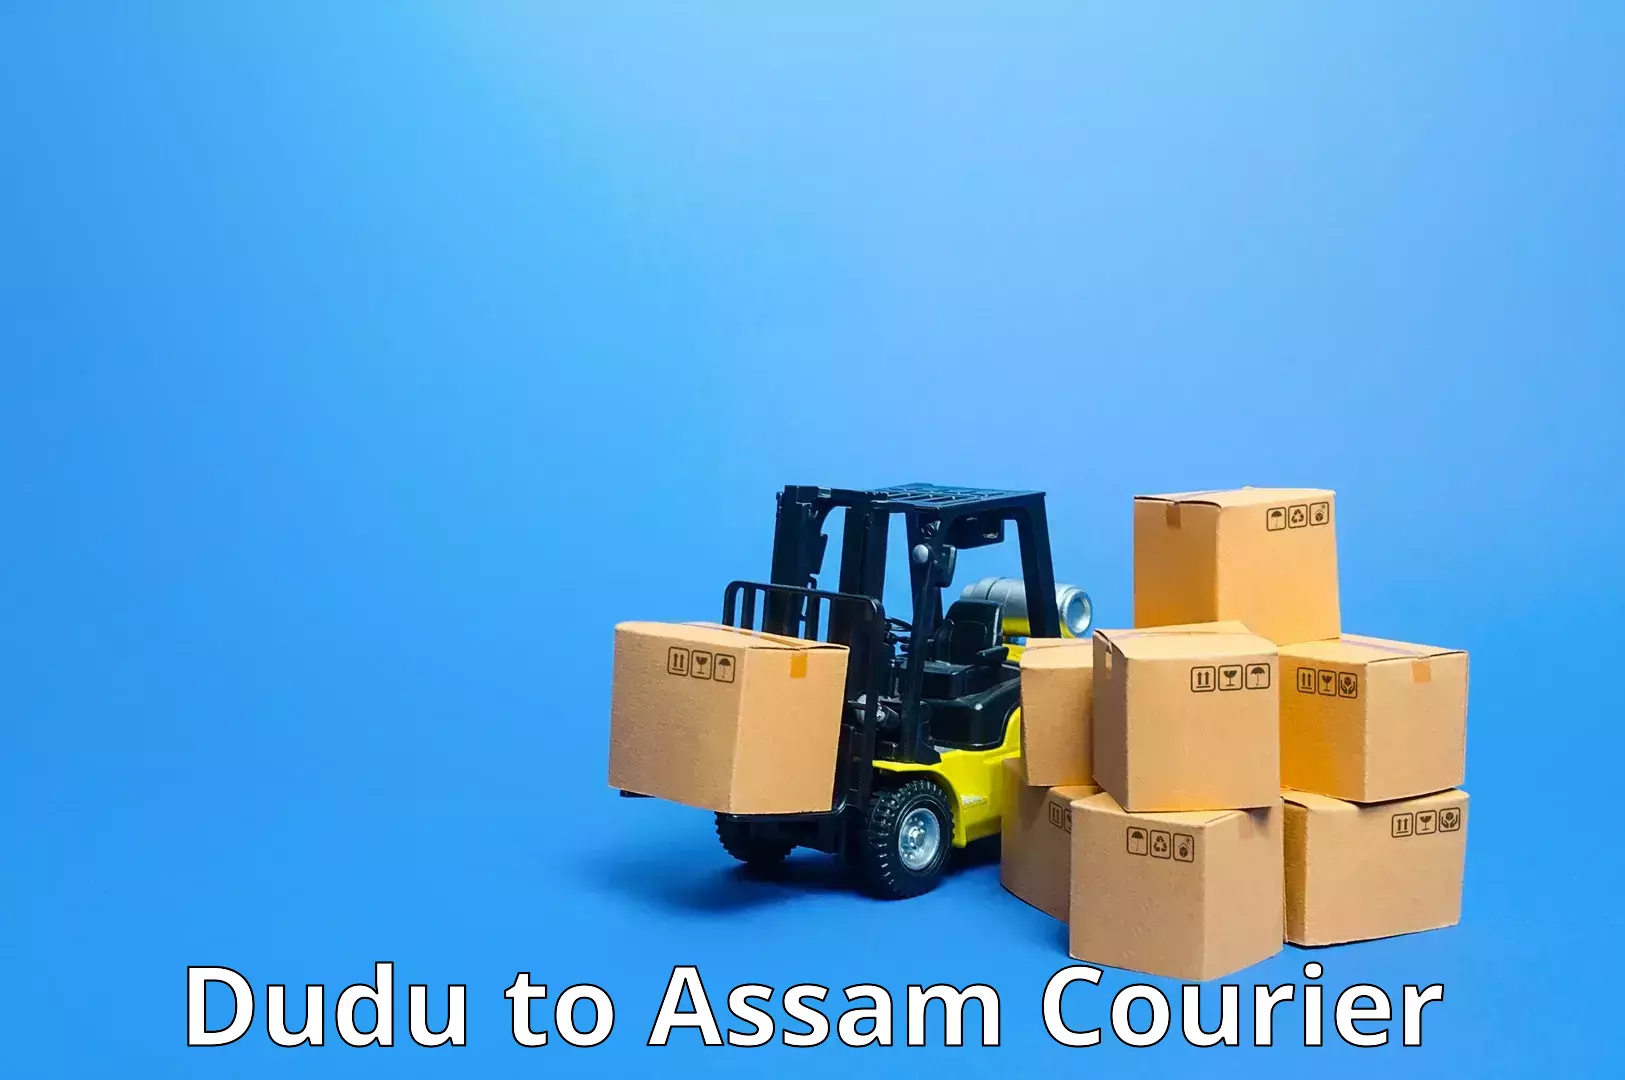 Bulk shipment Dudu to Assam